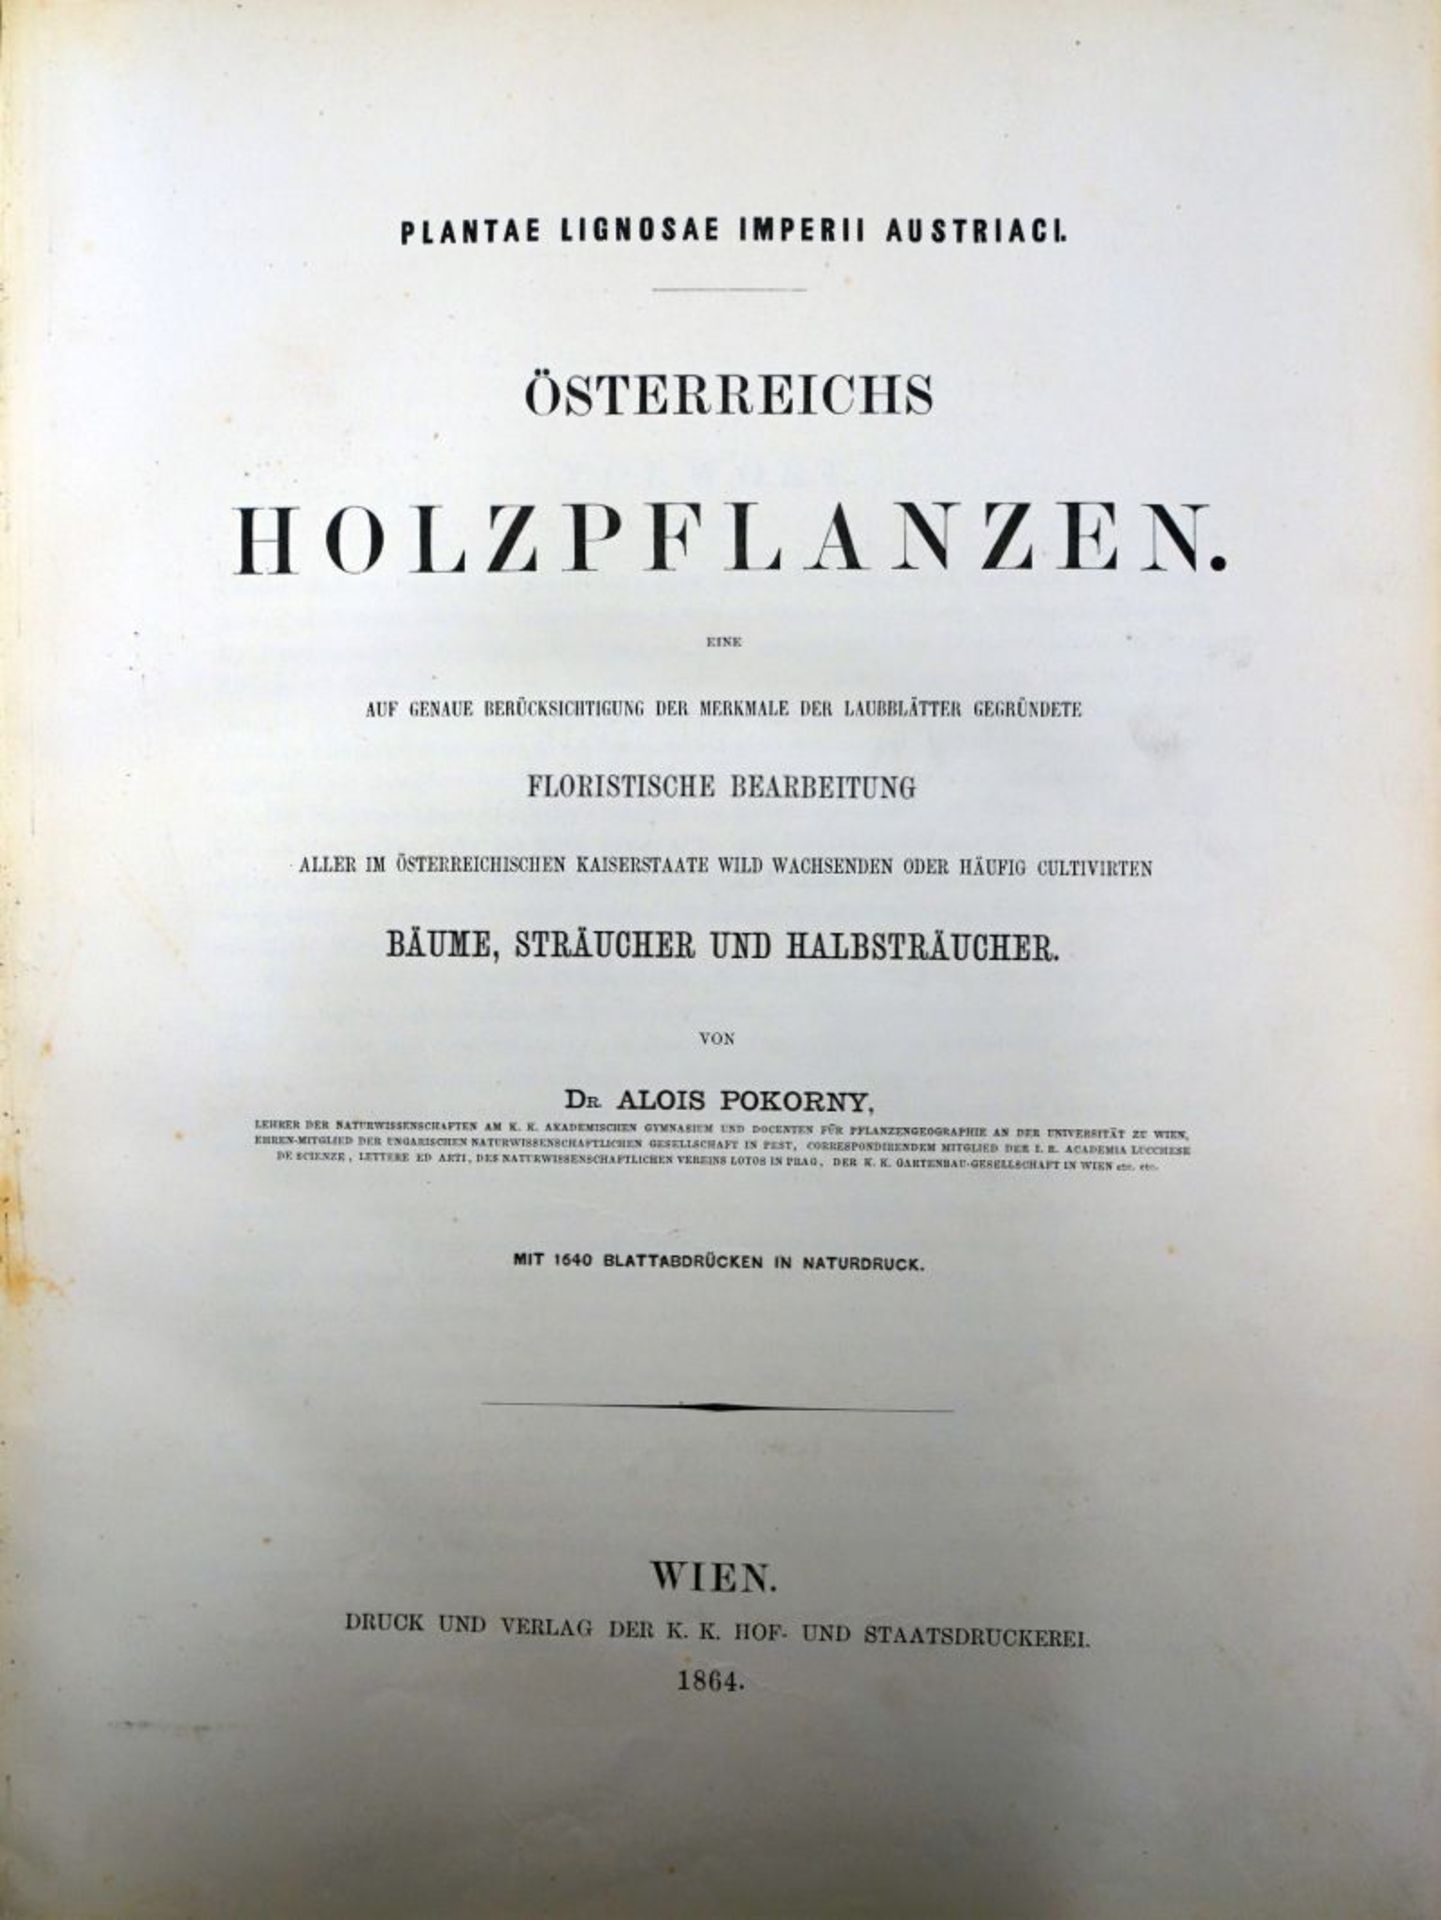 Pokorny, Alois: Plantae lignosae imperri austriaci. Österreichs Holzpfla...